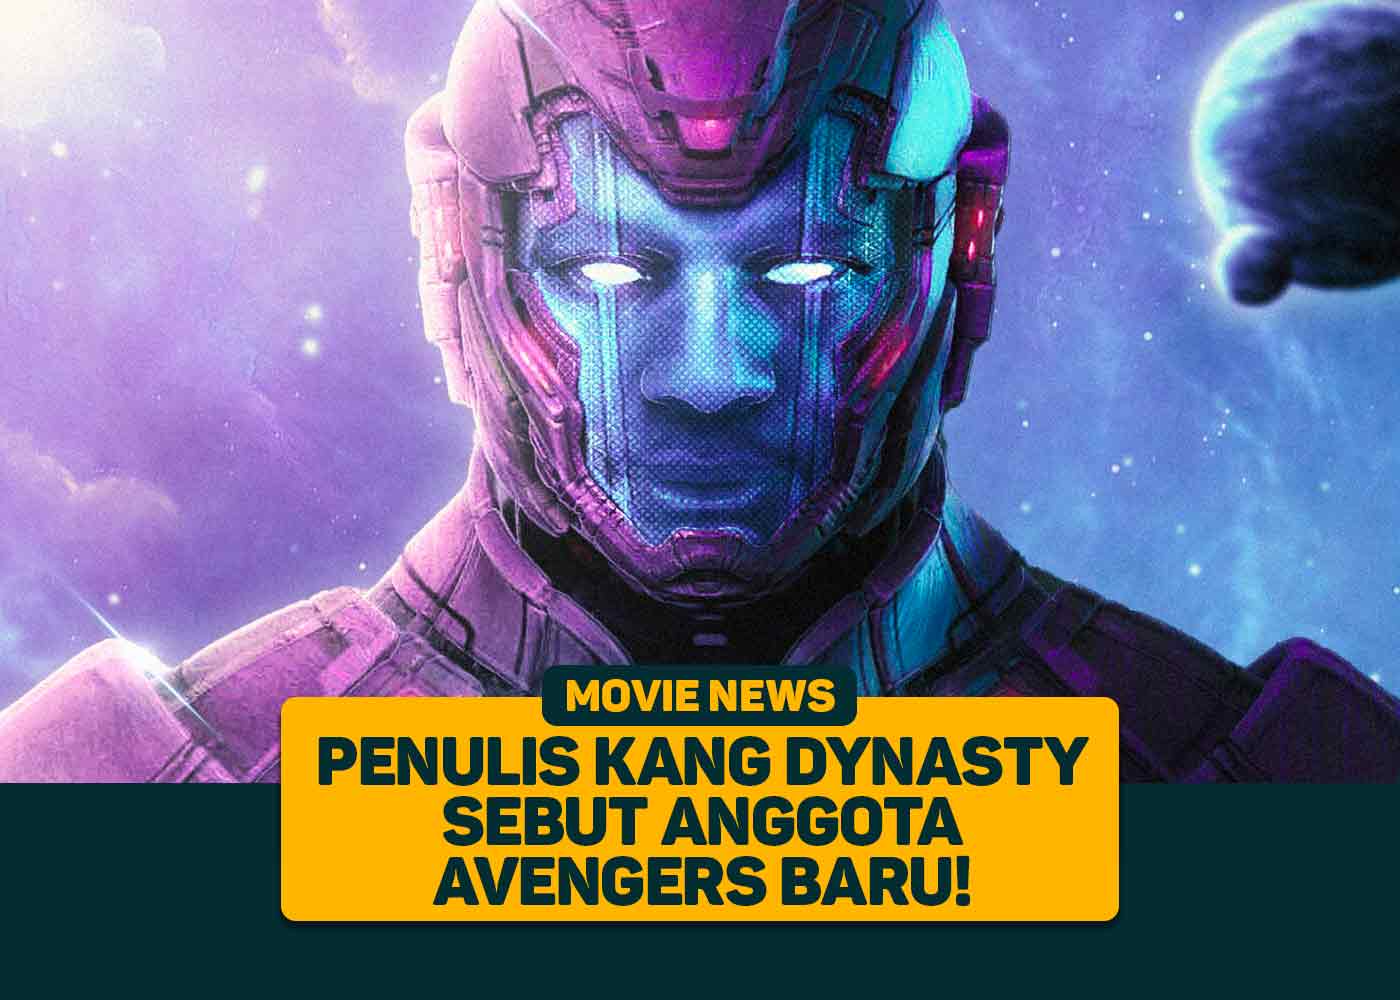 Penulis Kang Dynasty Sebut Anggota Avengers Baru